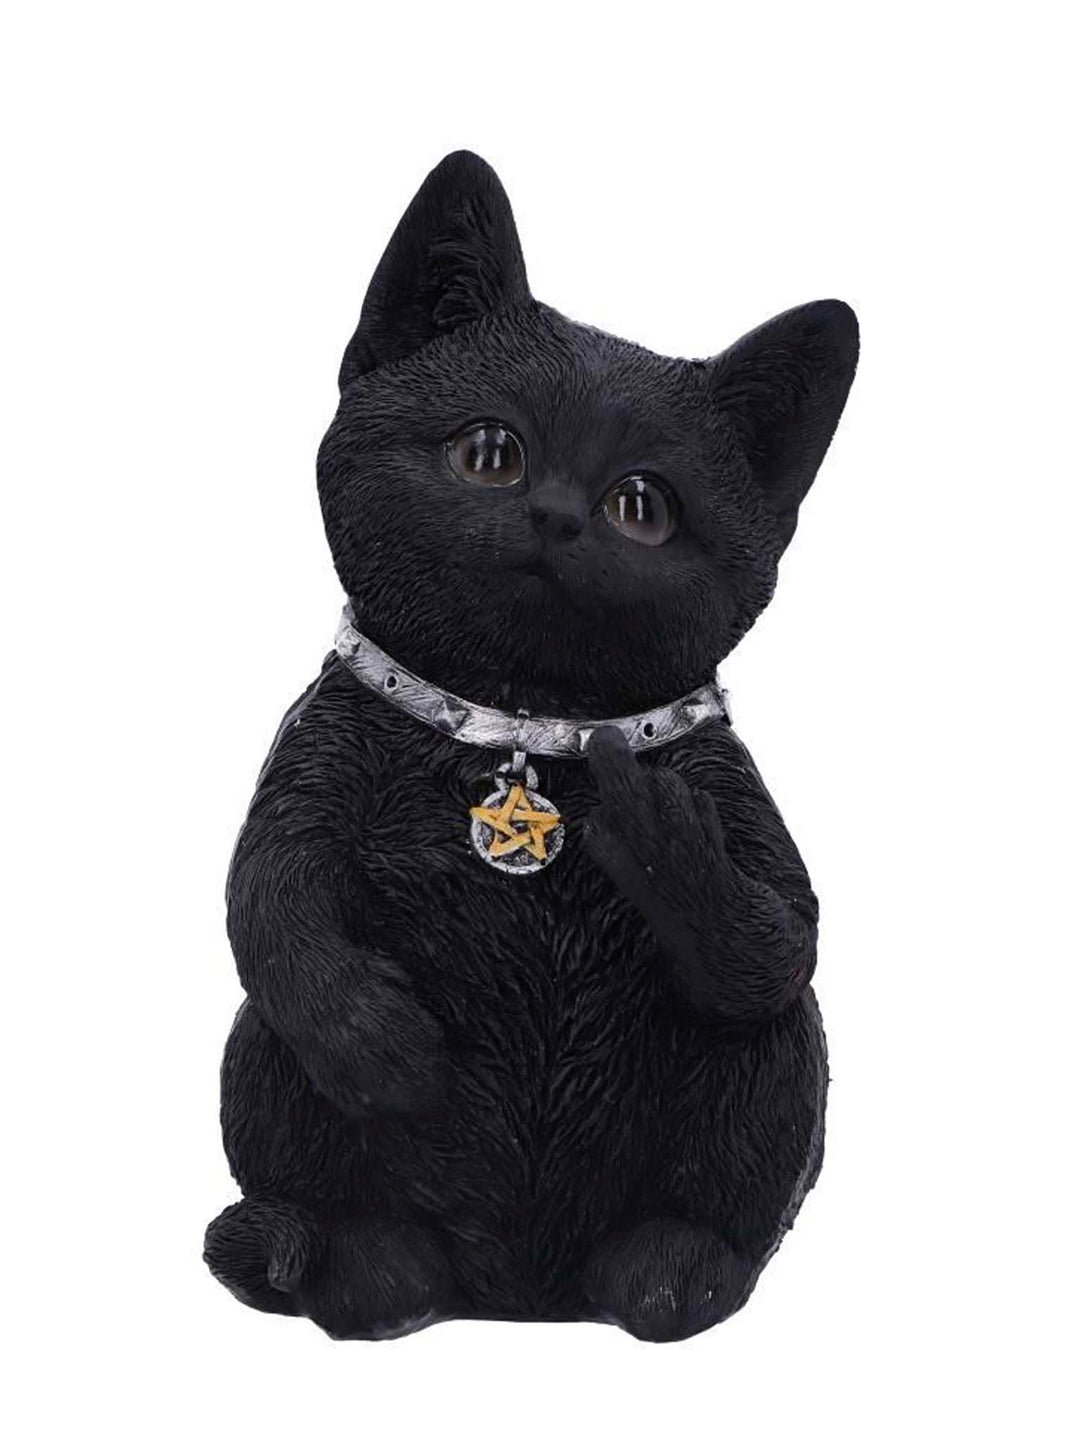 Black Cat Showing Middle Finger, Cattitude Black Cat Figurine